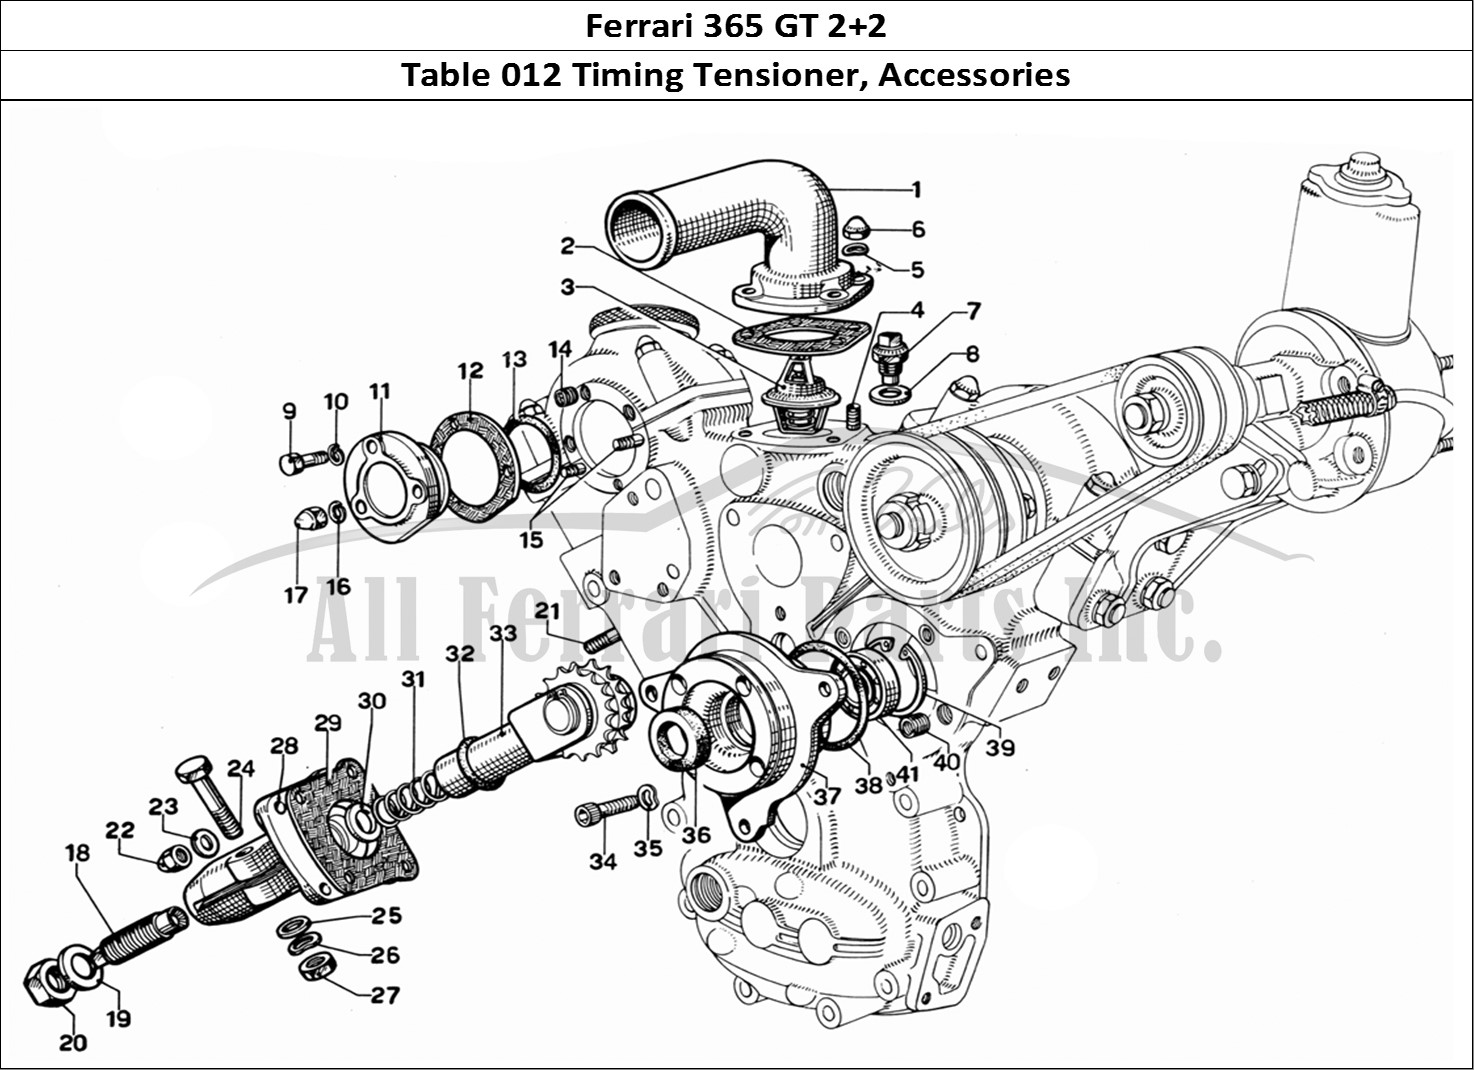 Ferrari Parts Ferrari 365 GT 2+2 (Mechanical) Page 012 Timing (Accessories)